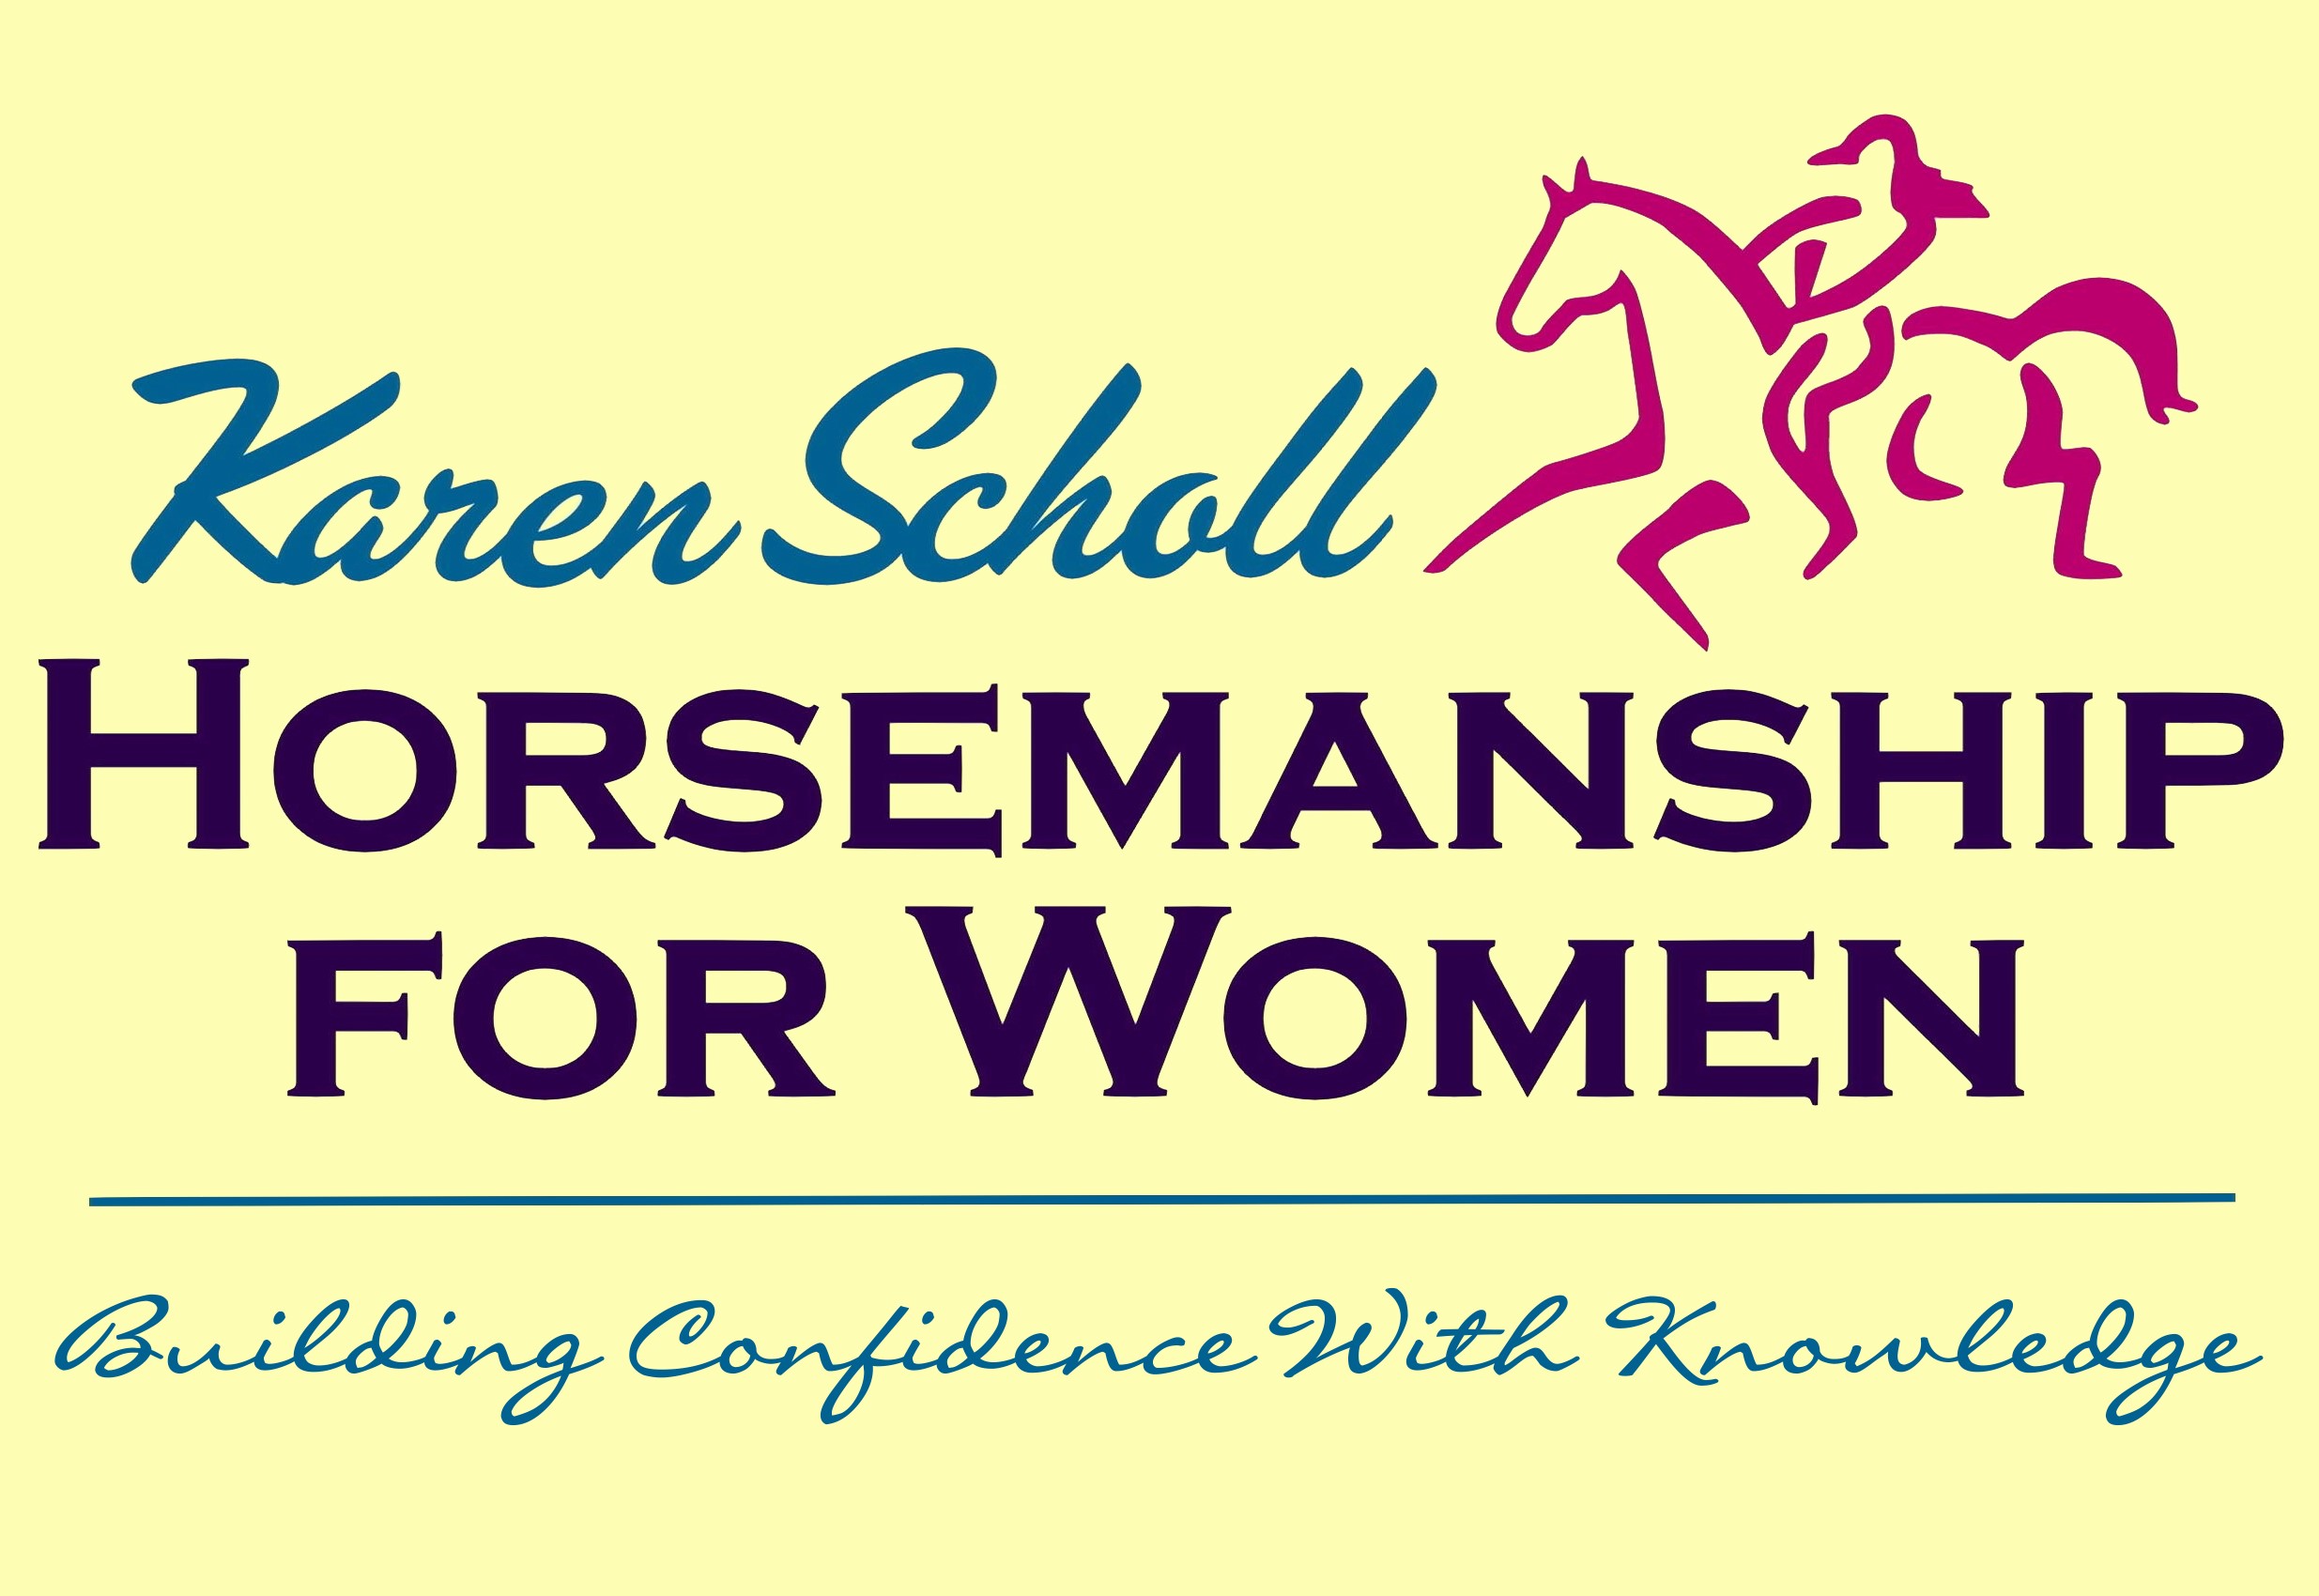 Karen Scholl - horsemanship for women